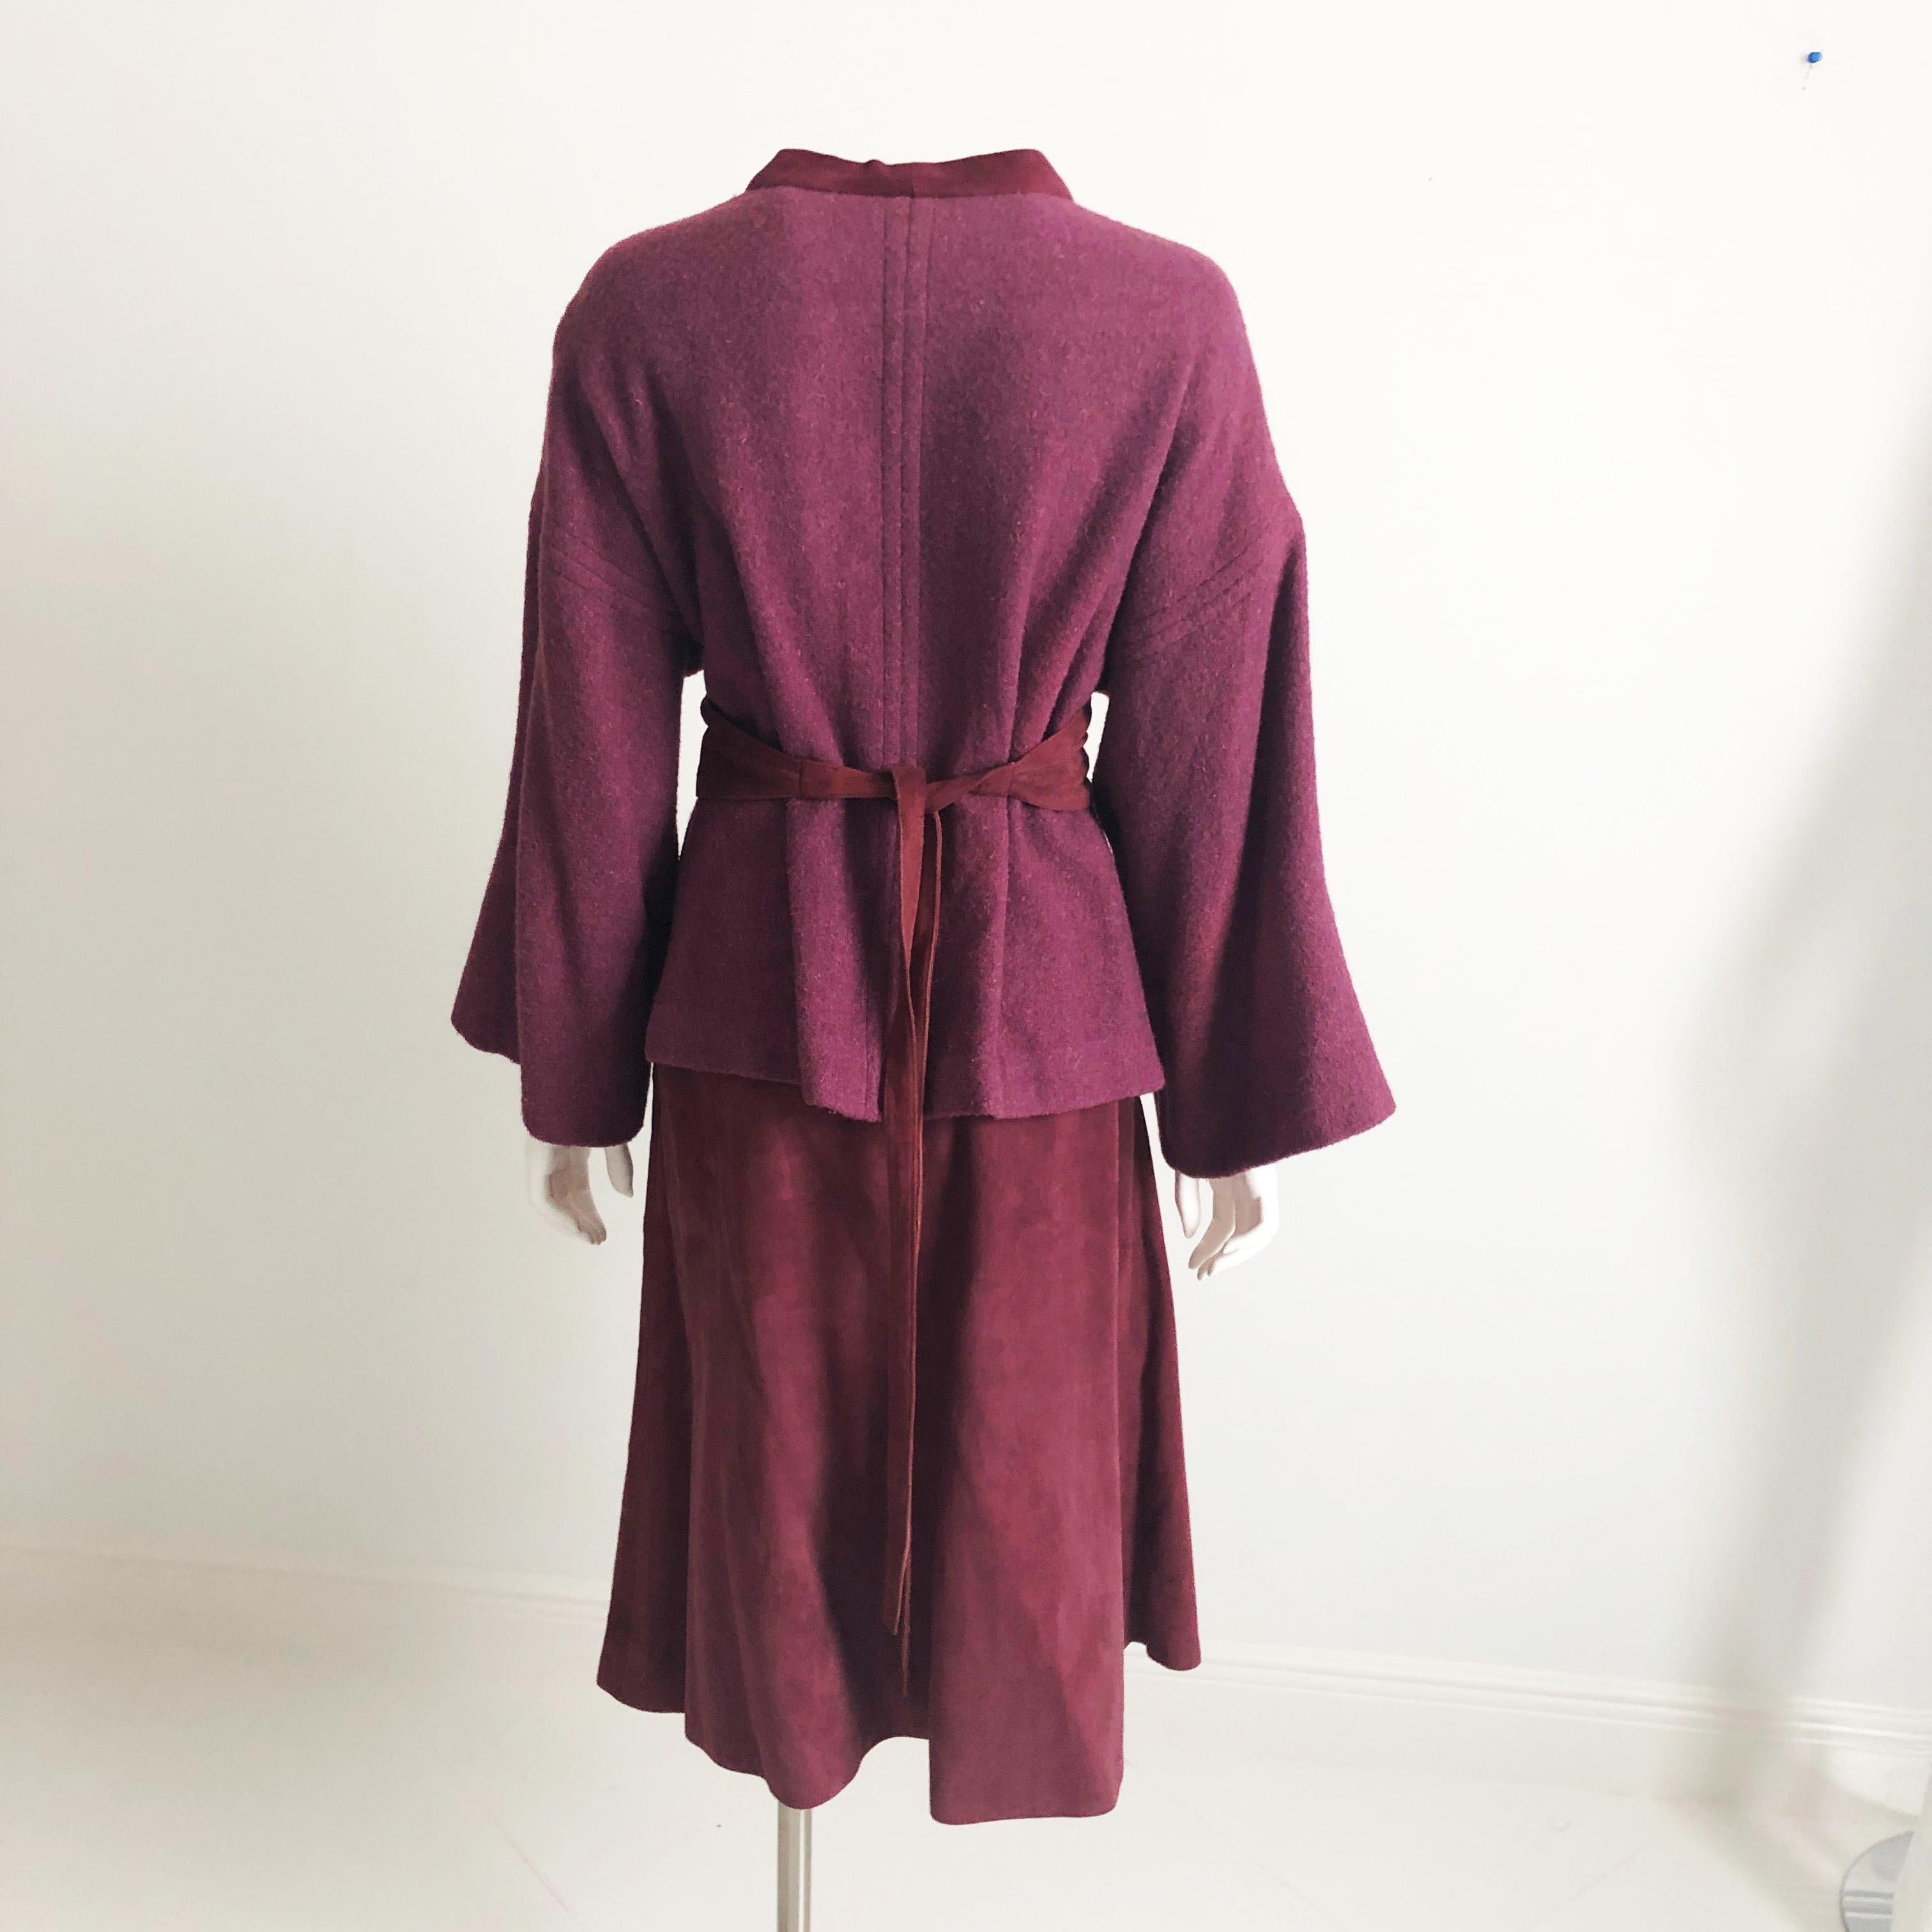 Brown Bonnie Cashin Wool & Suede Belted Kimono & Skirt 3pc Set Vintage 1960s